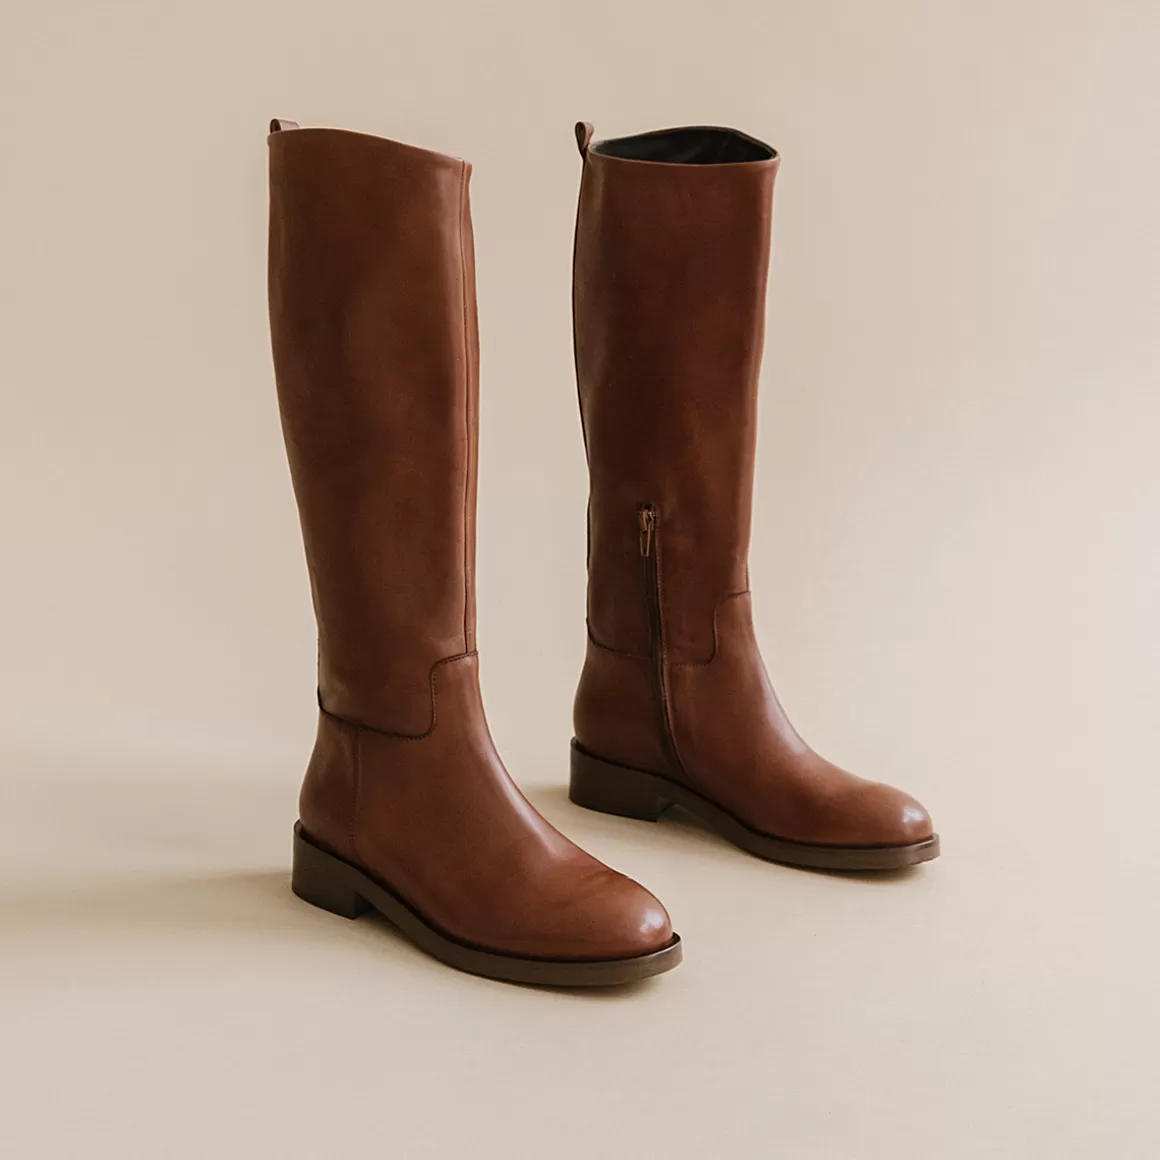 High boots<Jonak Flash Sale